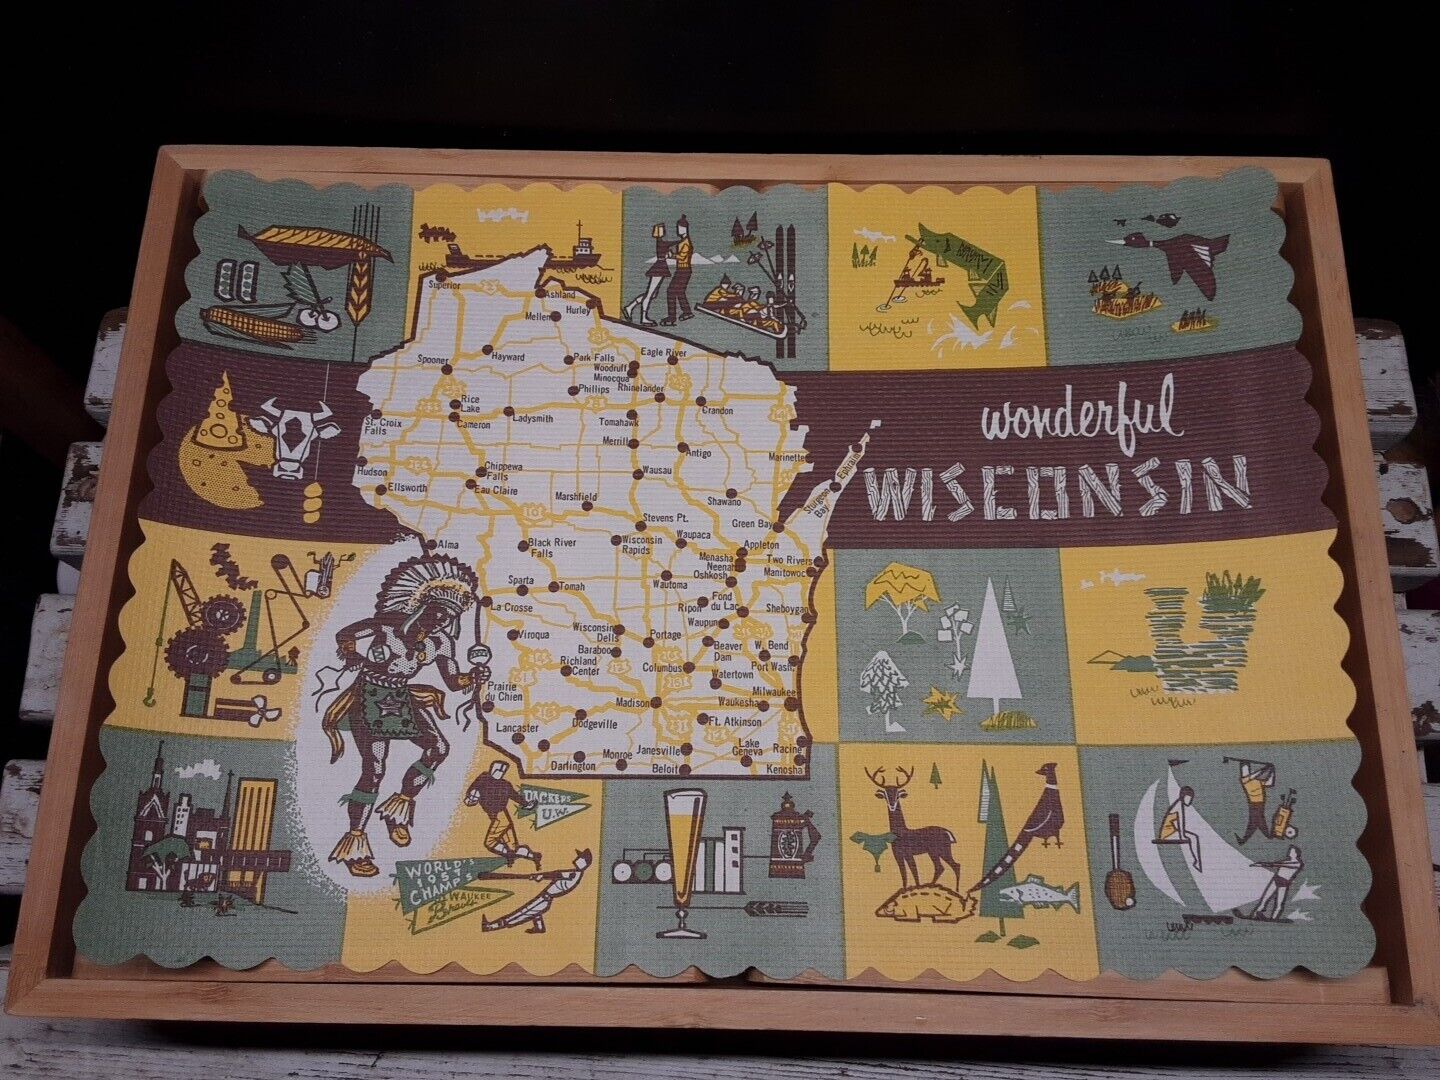 Vntg Restaurant Paper Placemat-Wonderful Wisconsin-mint Cond, Amazing Graphics